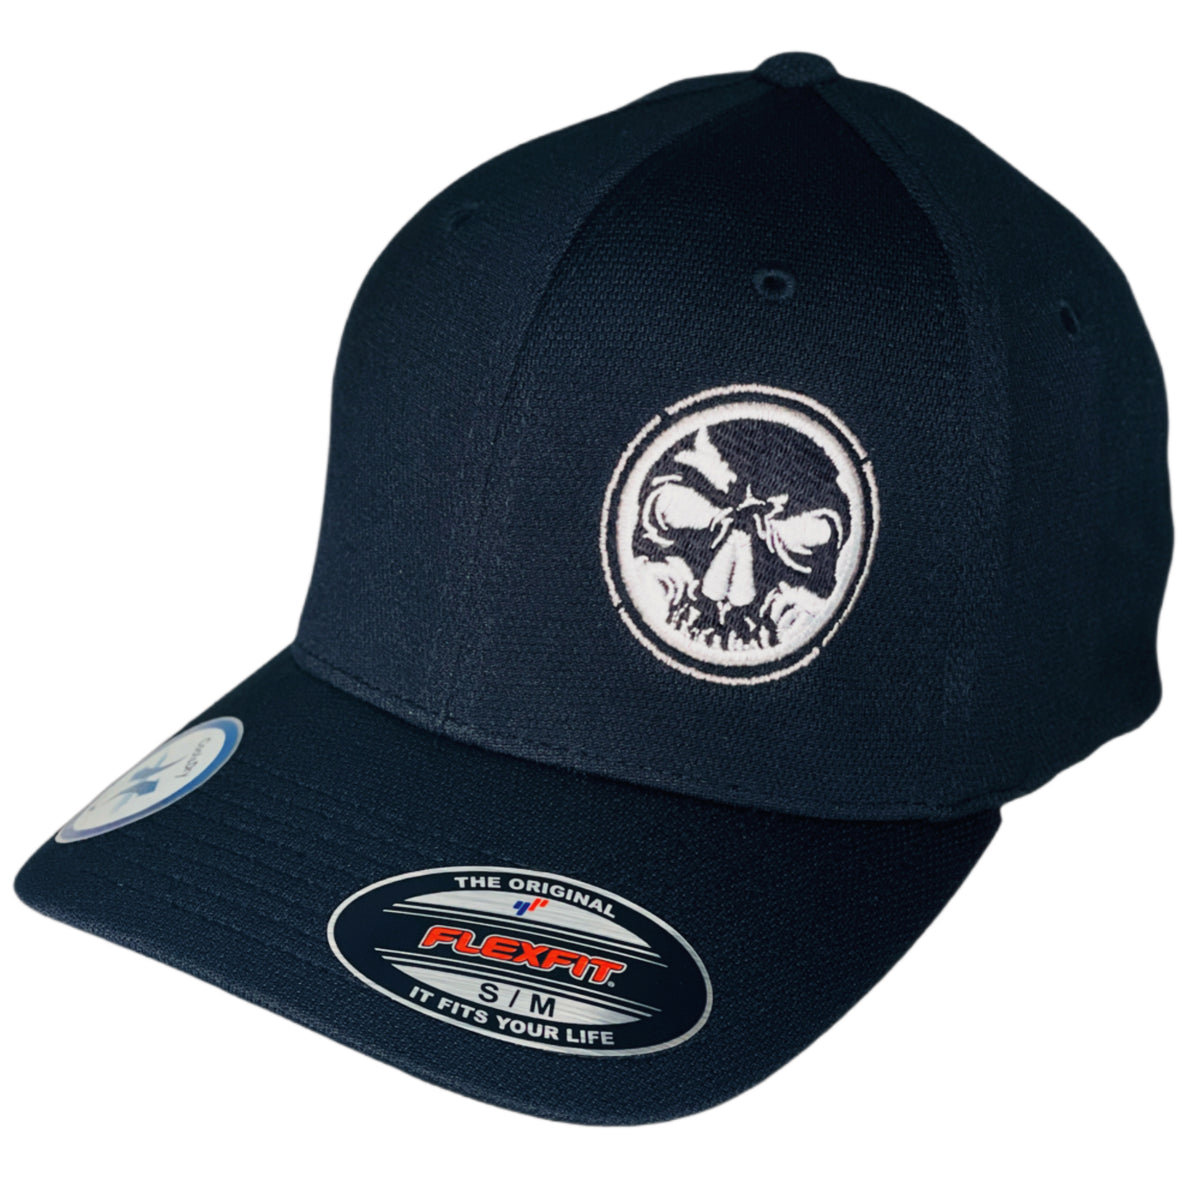 Flexfit "Never Fade" Black Hat - Inverted Phantom